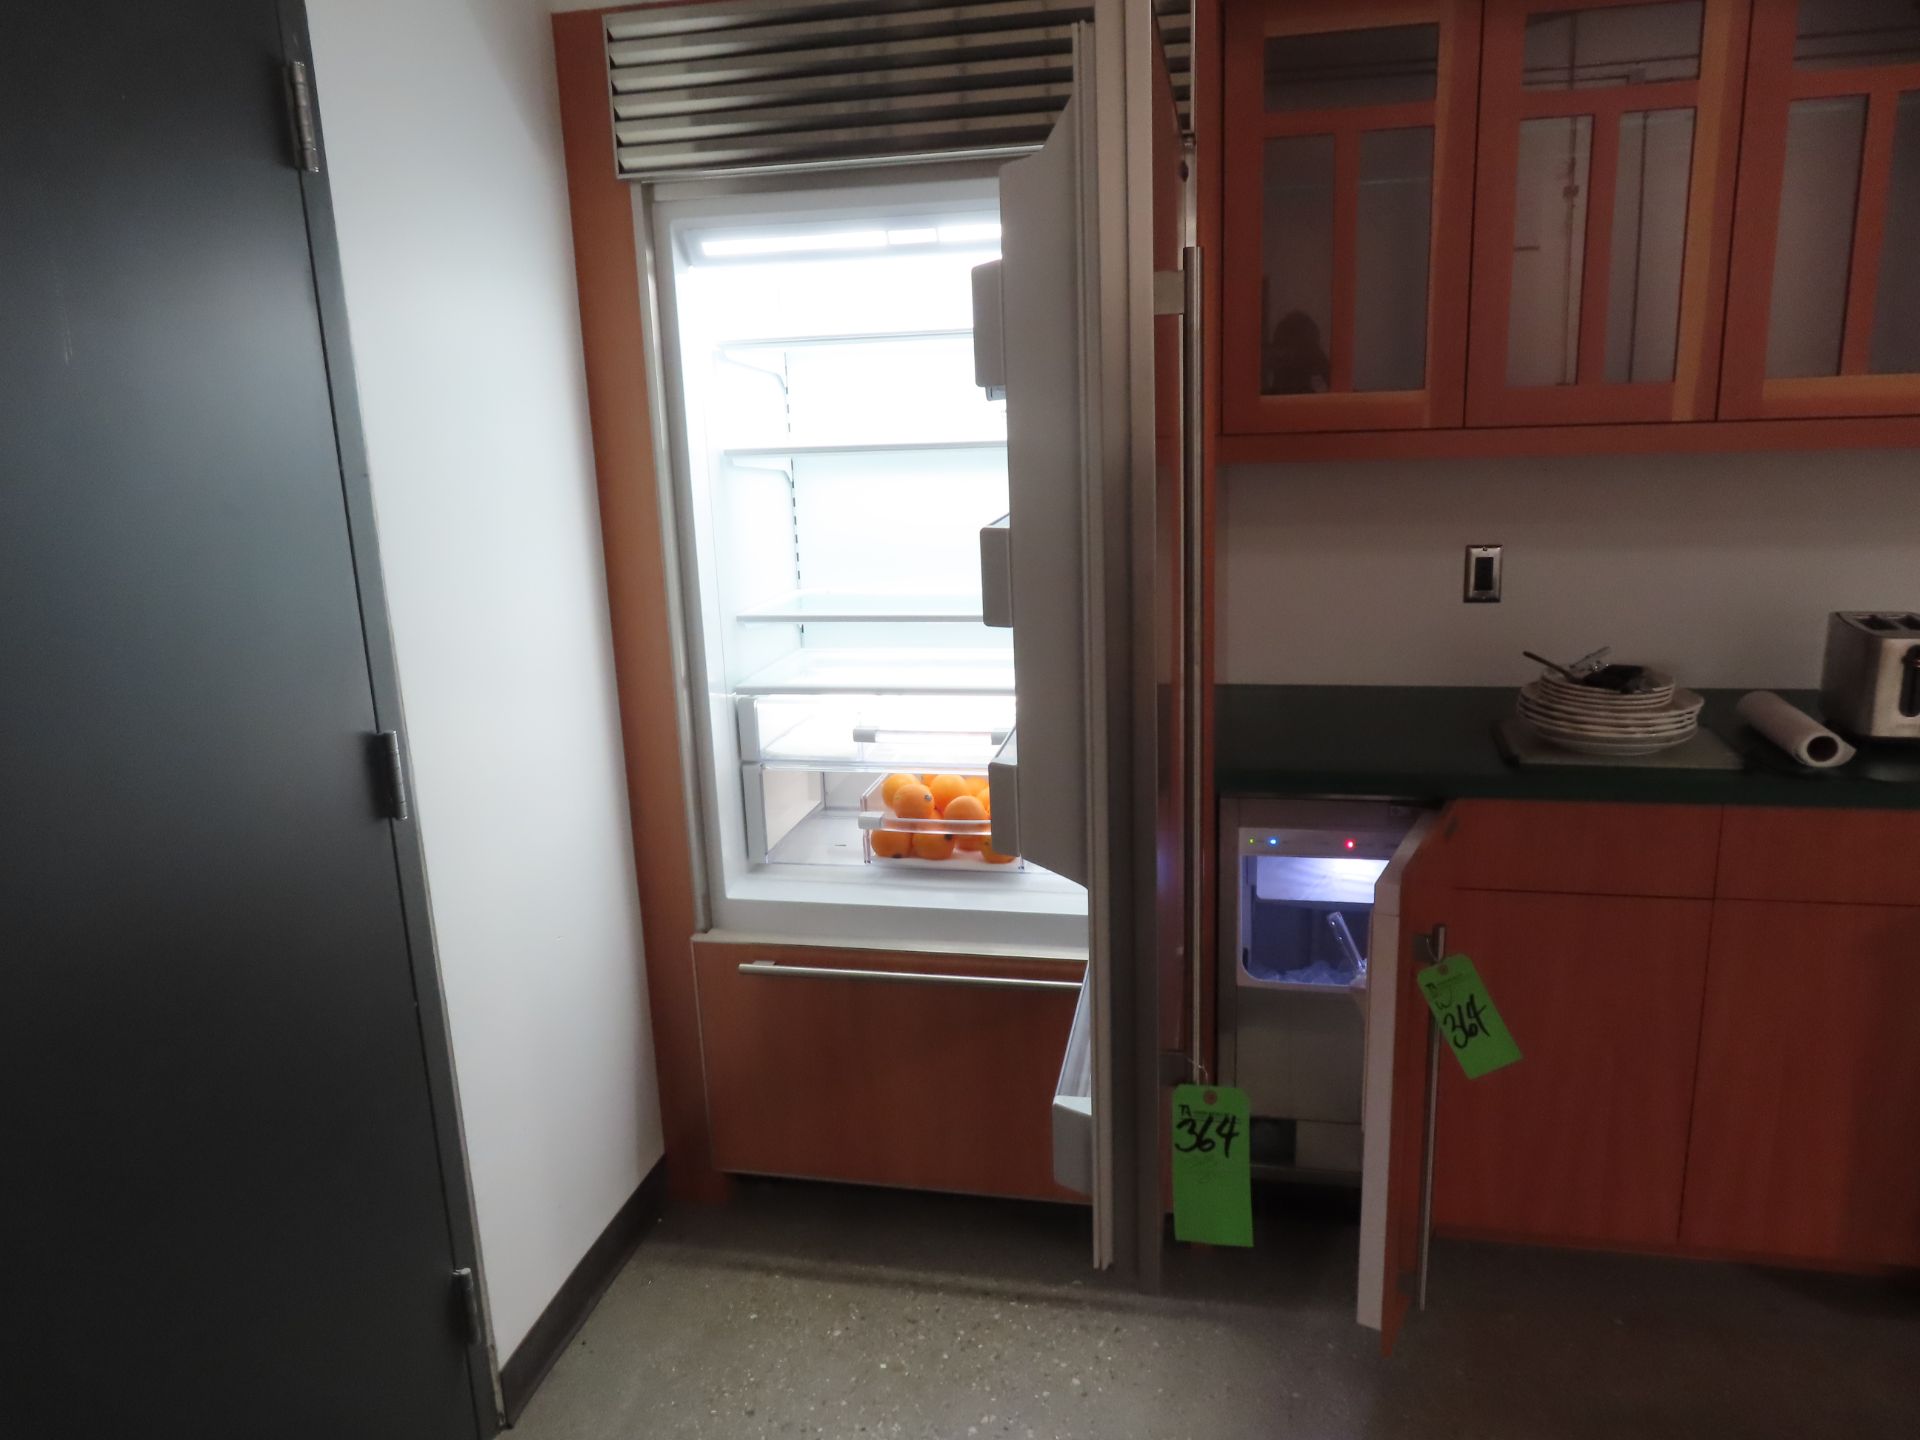 (Lot) Sub-Zero Refrigerator and Ice Maker